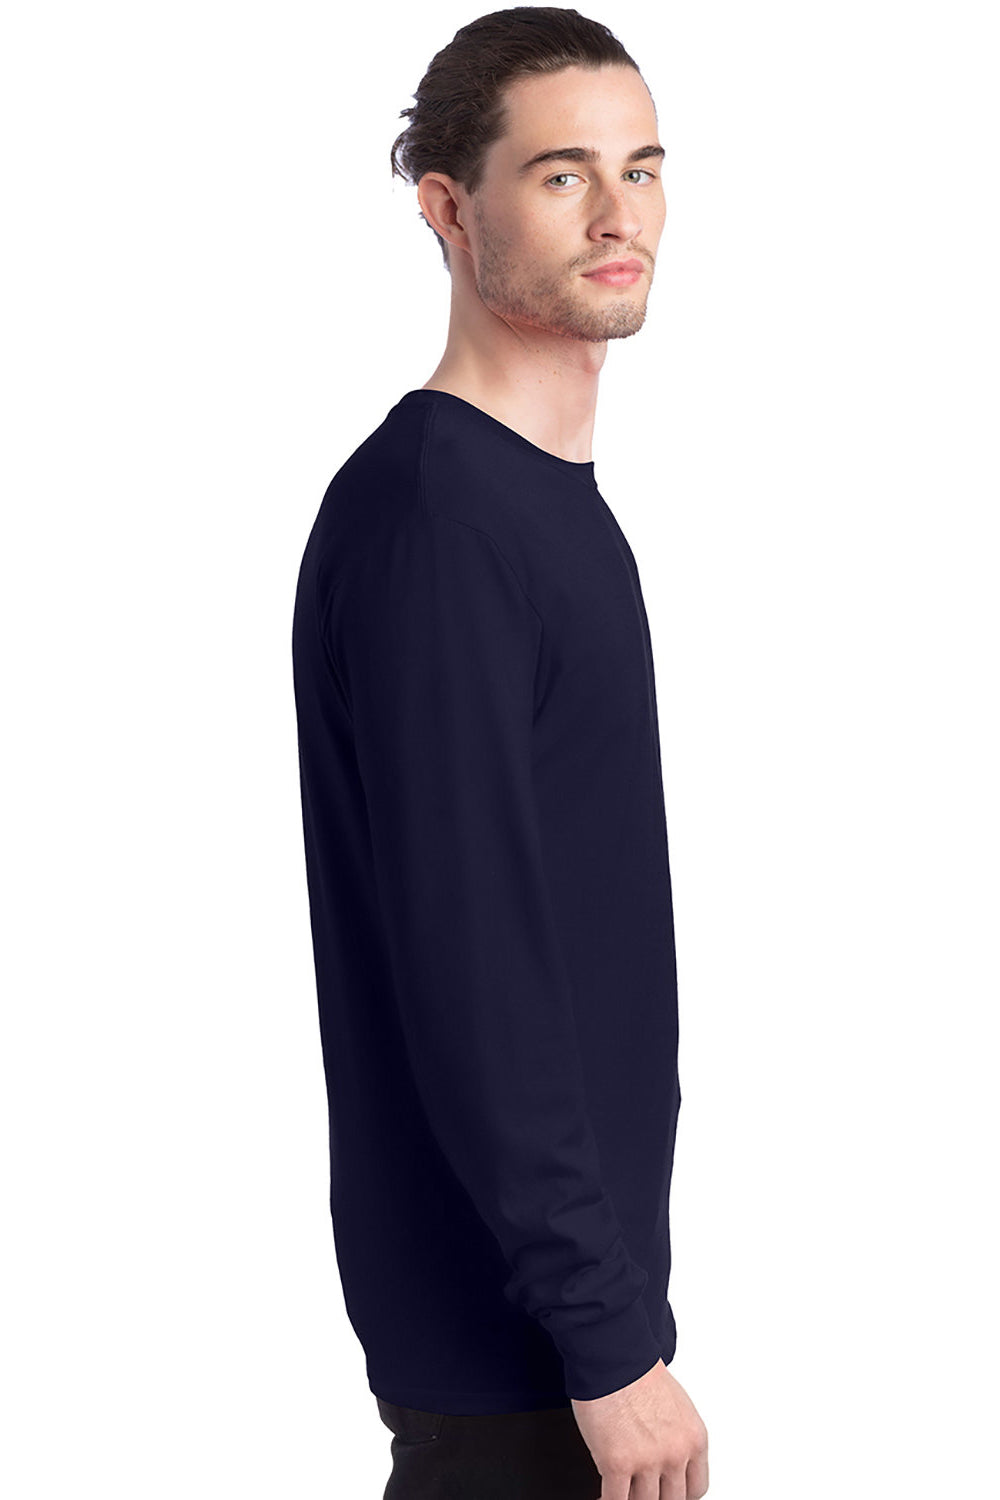 Hanes 5286 Mens ComfortSoft Long Sleeve Crewneck T-Shirt Athletic Navy Blue SIde